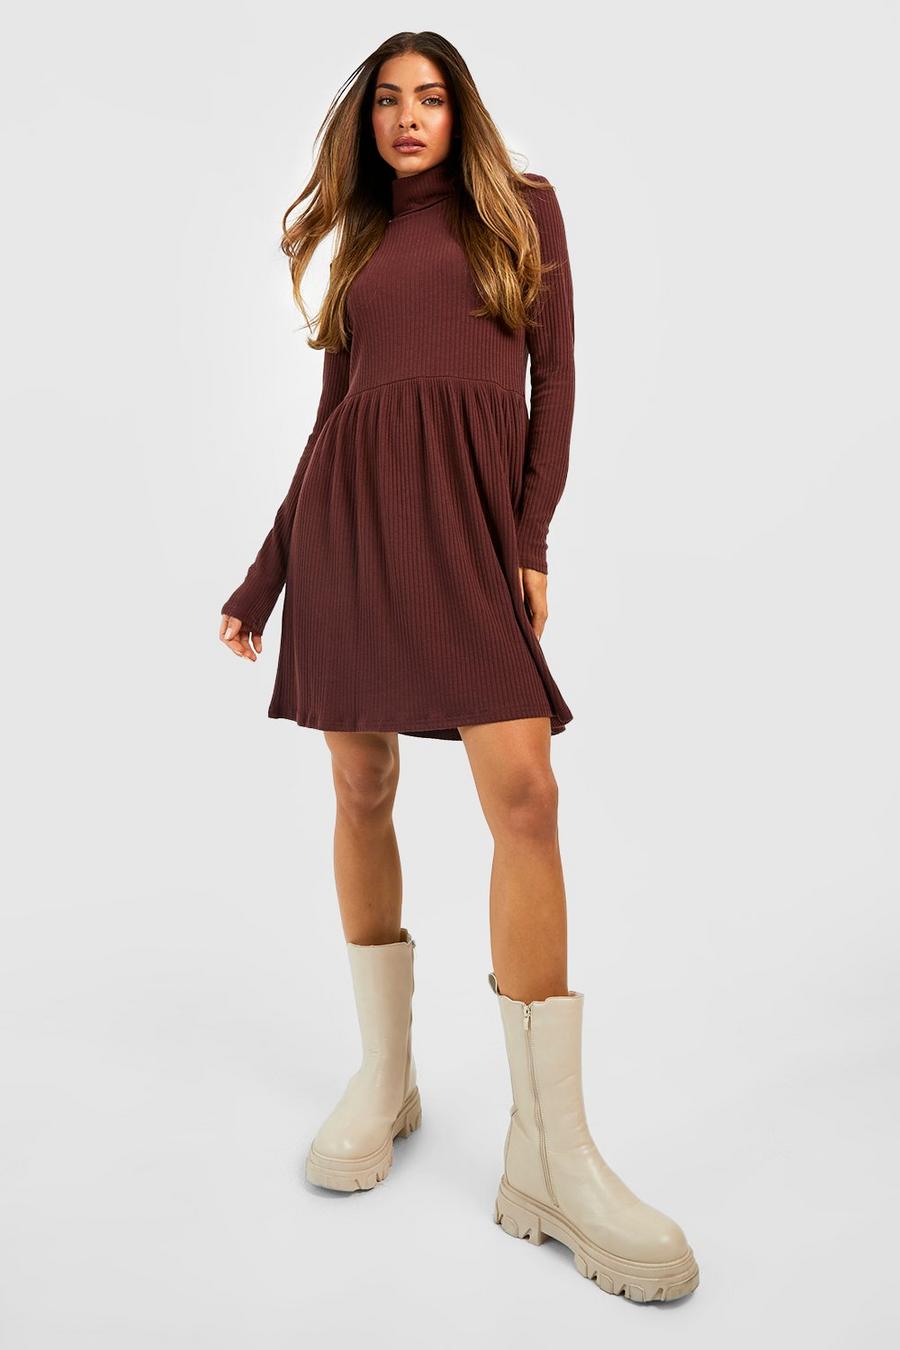 Chocolate brown Turtleneck Long Sleeve Soft Rib Shift Dress